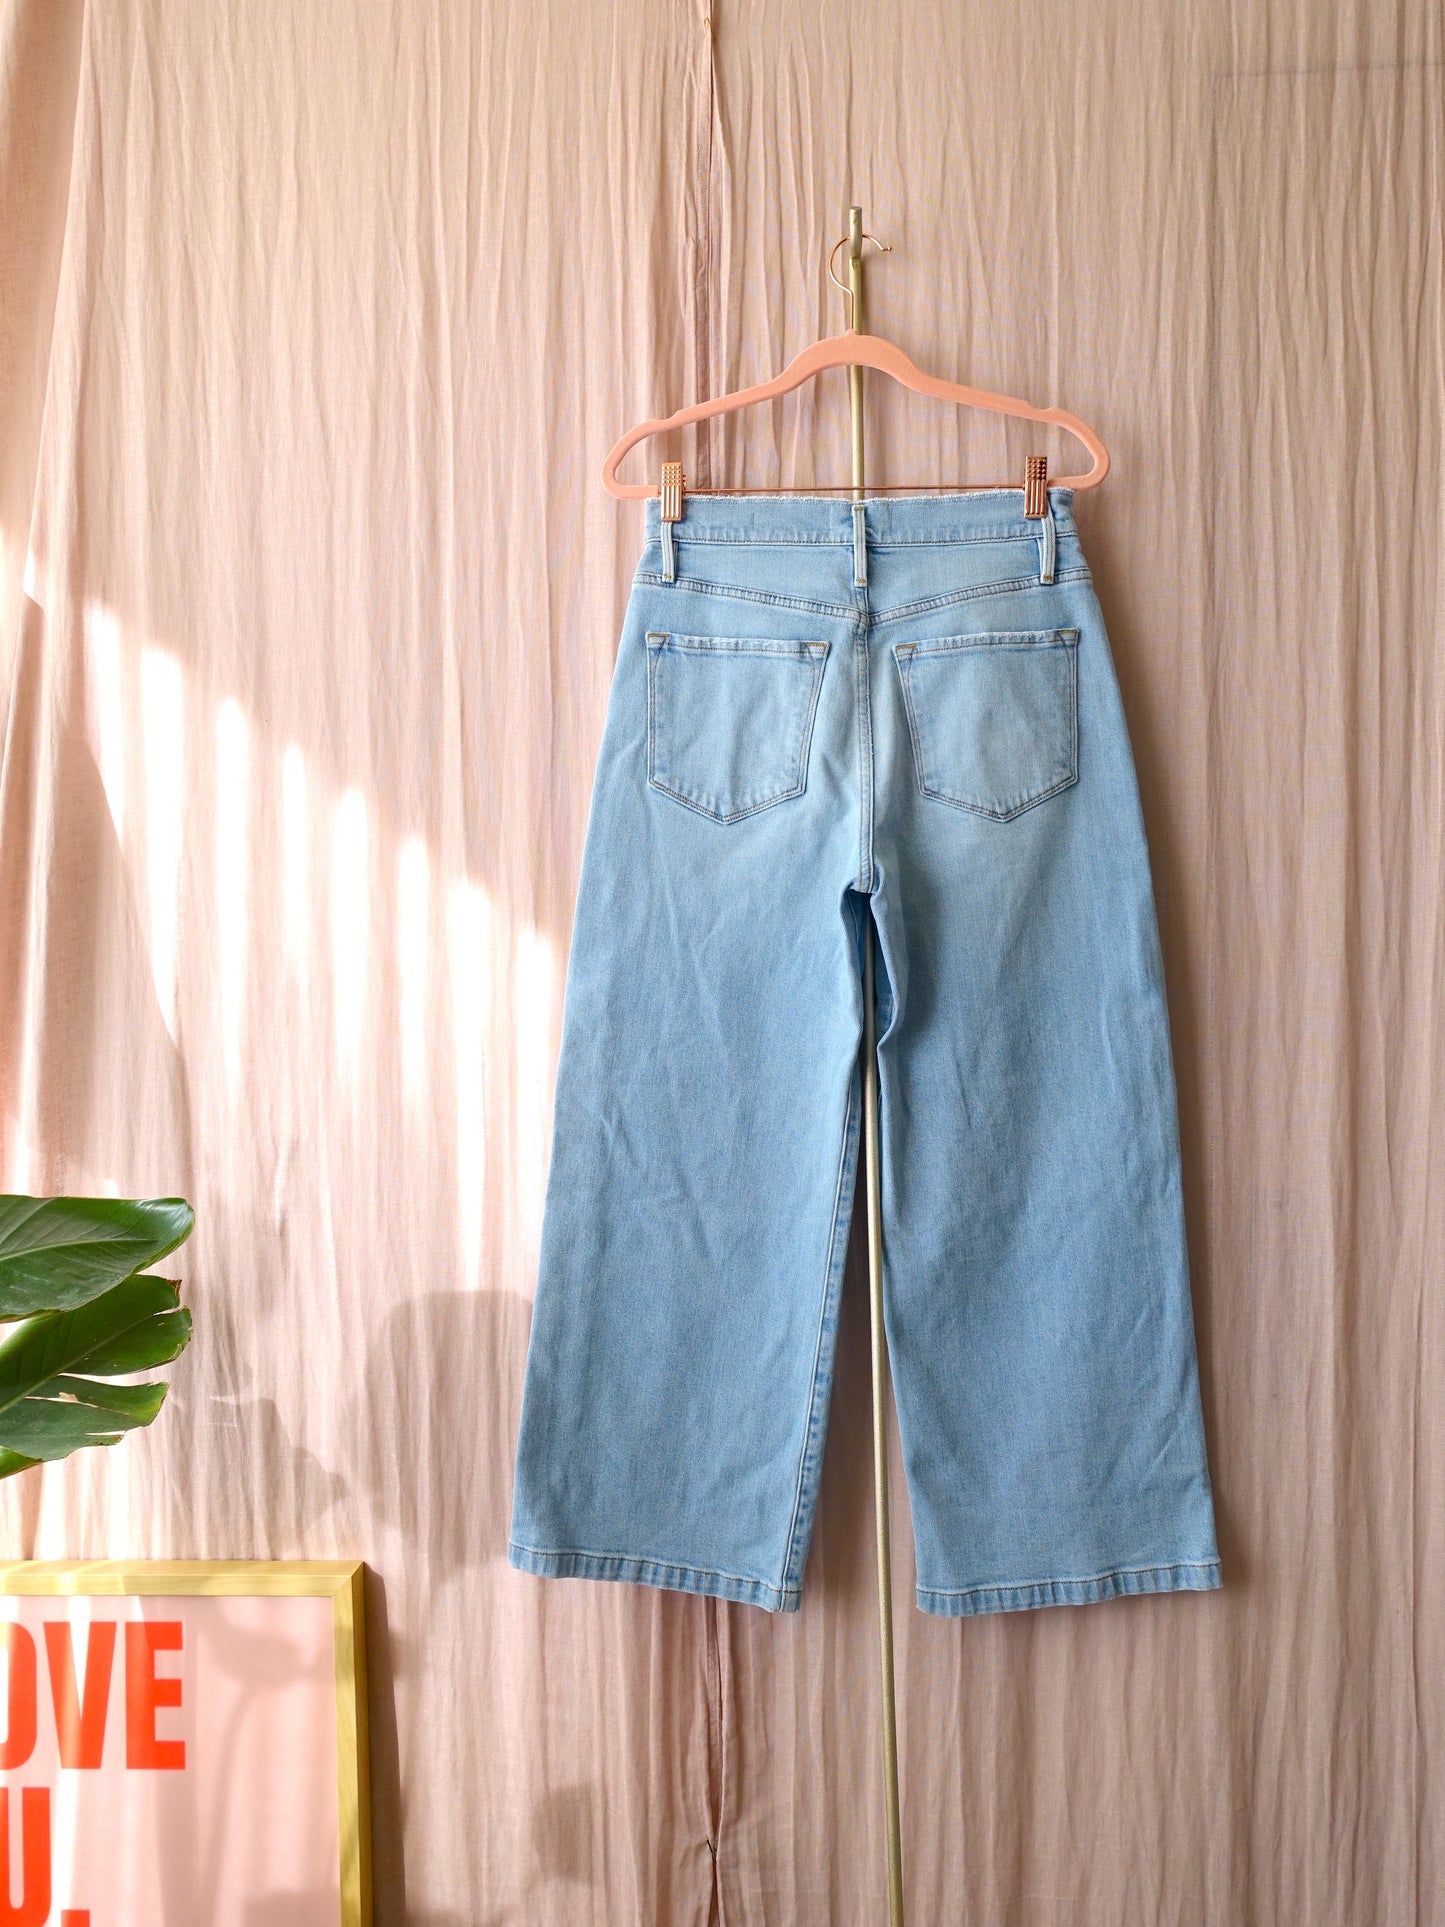 Frame ali wide crop jeans